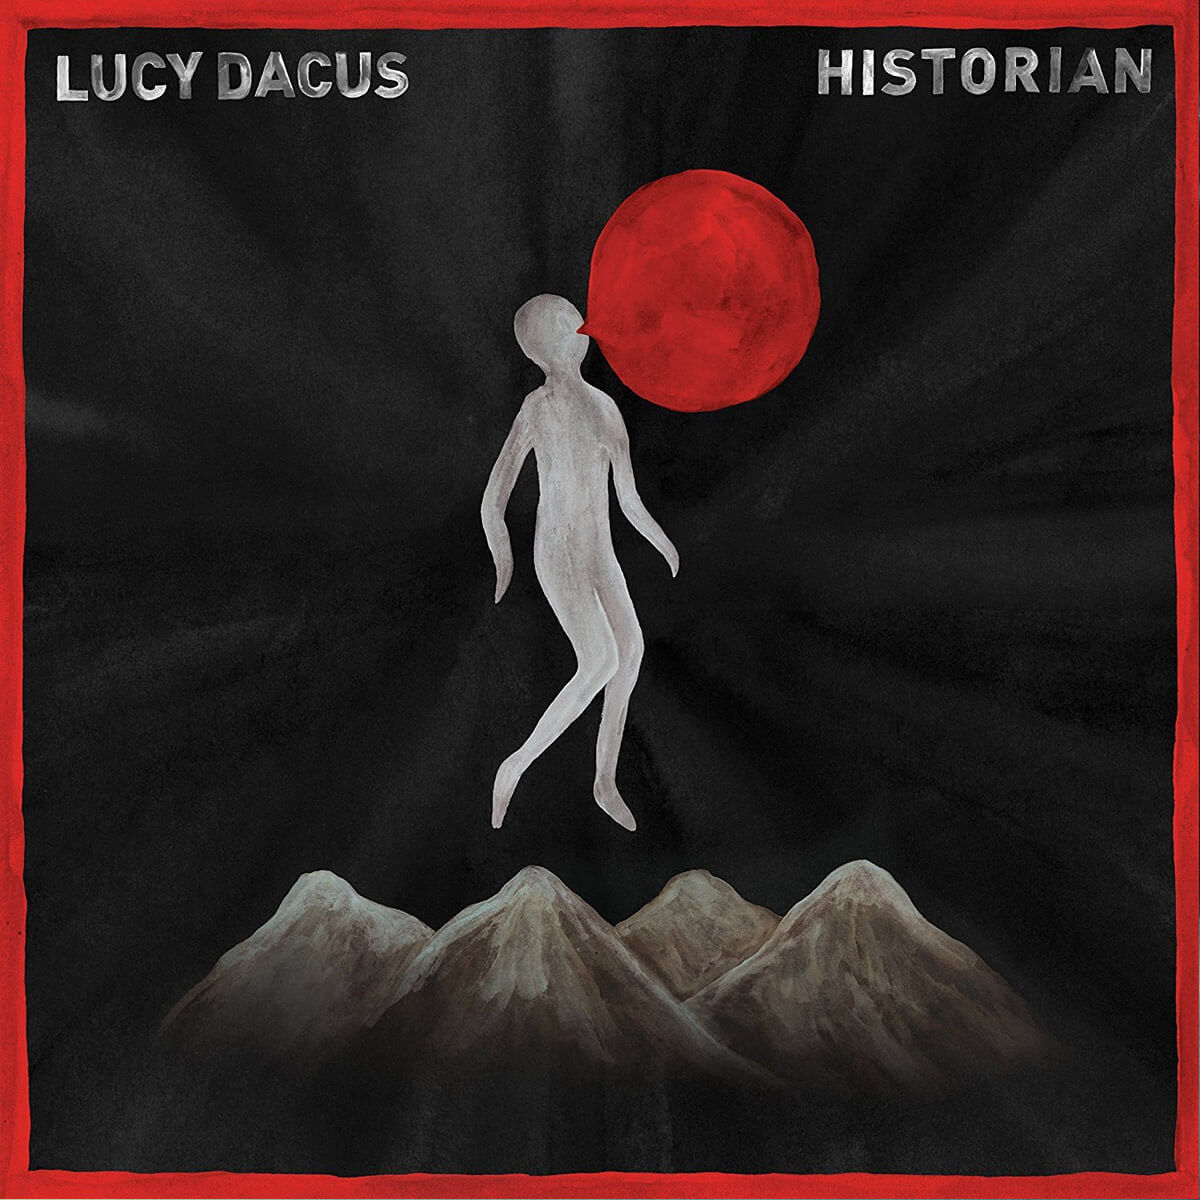 Discos 2018 - Historian